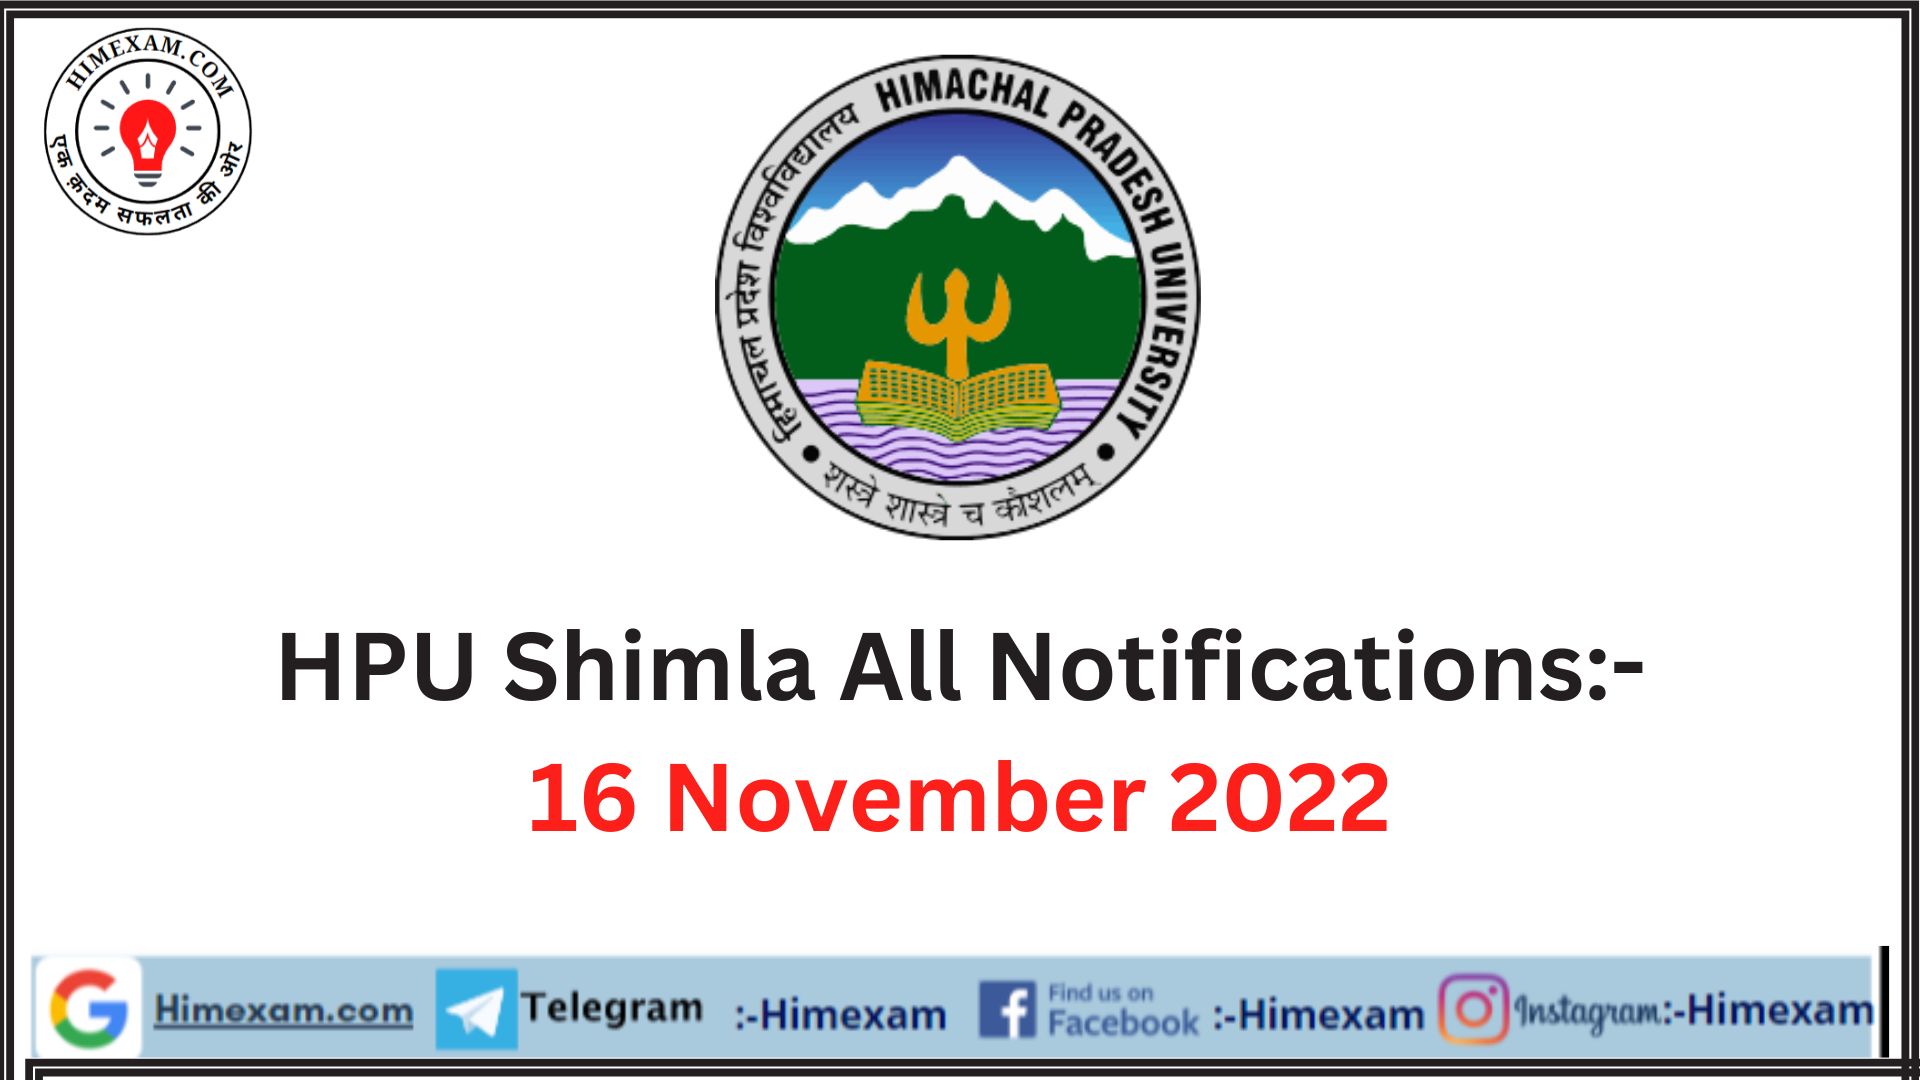 HPU Shimla All Notifications:- 16 November 2022